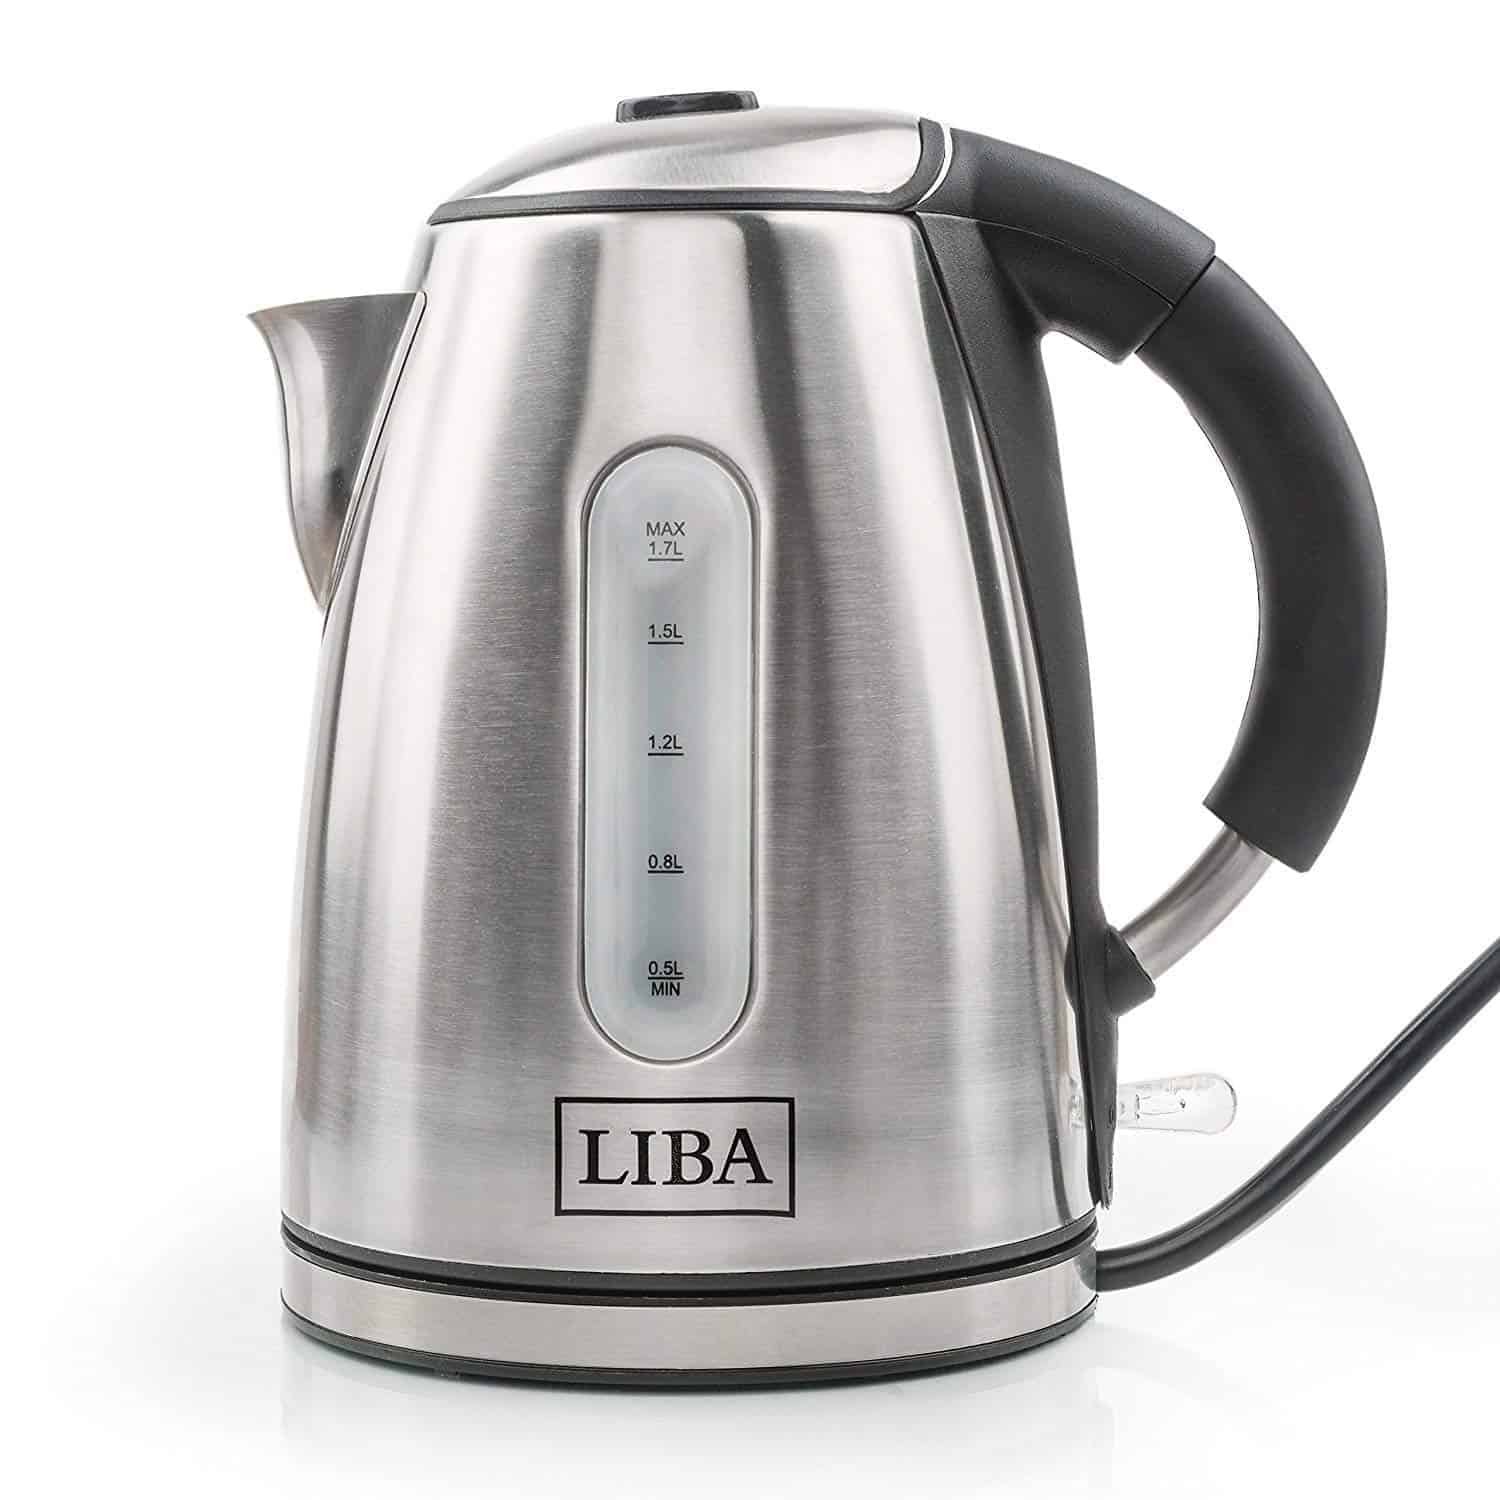 Stainless Steel Electric Tea Kettle by LiBa